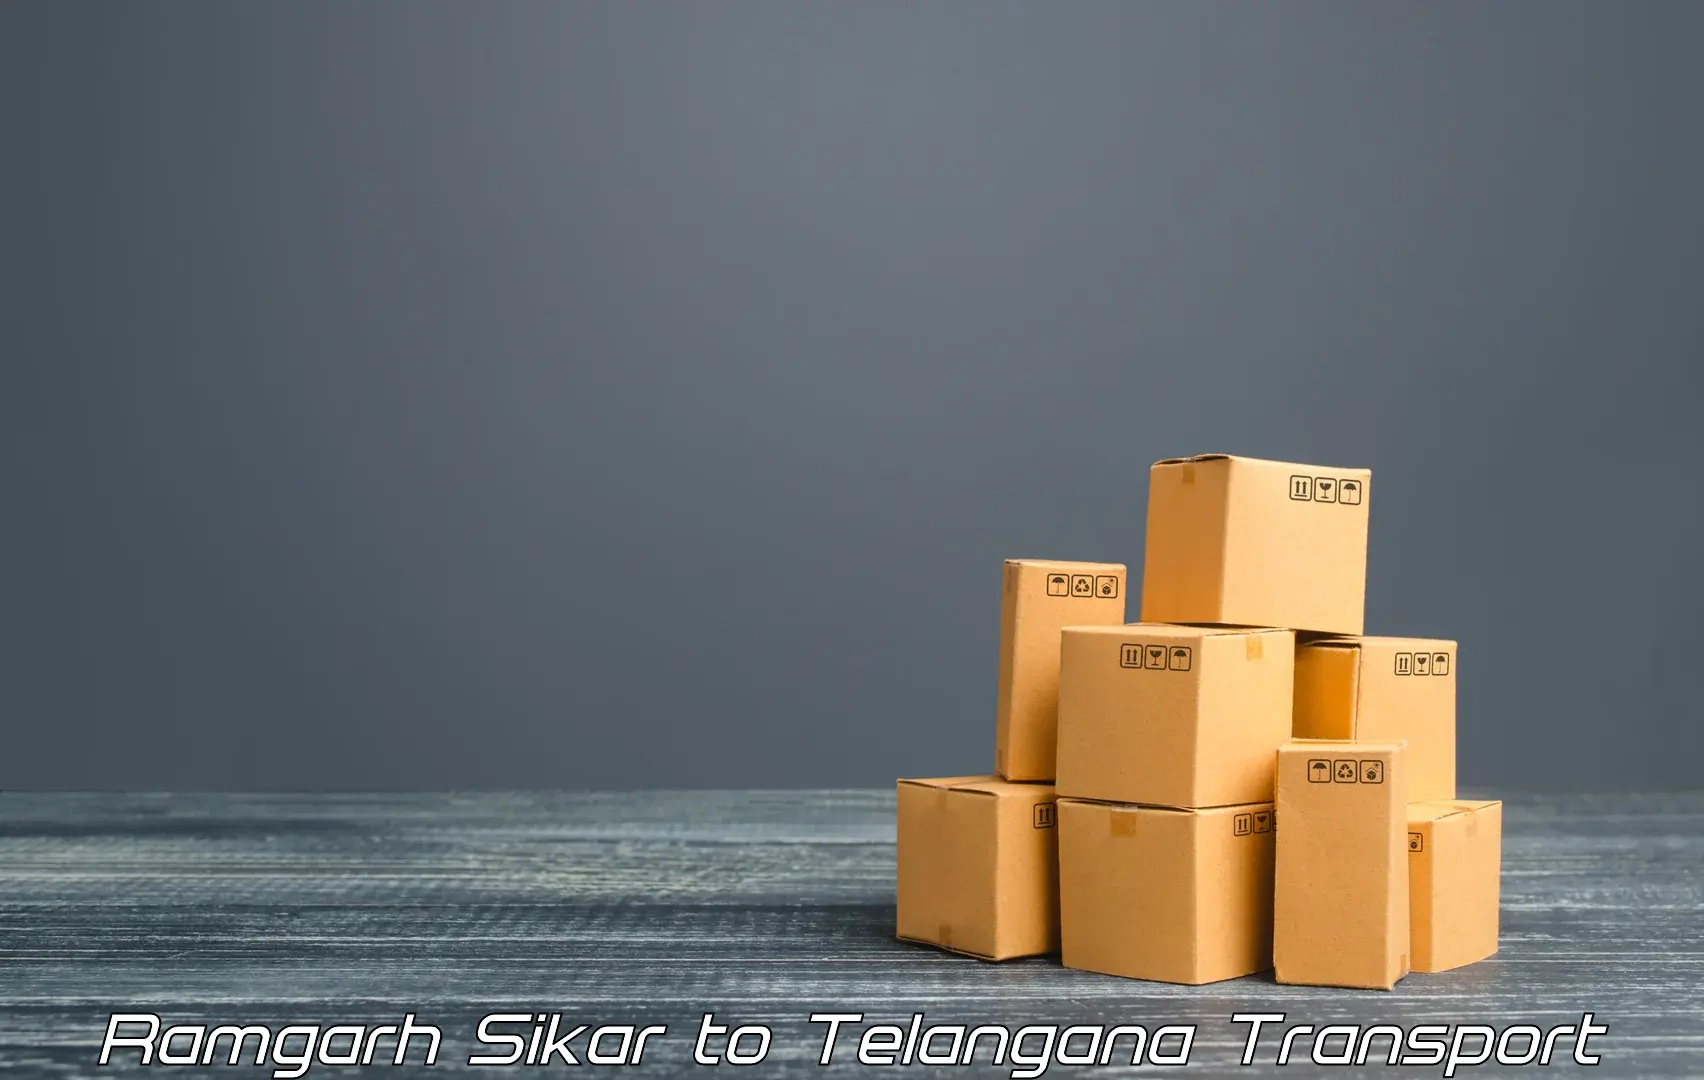 Container transport service Ramgarh Sikar to Dornakal